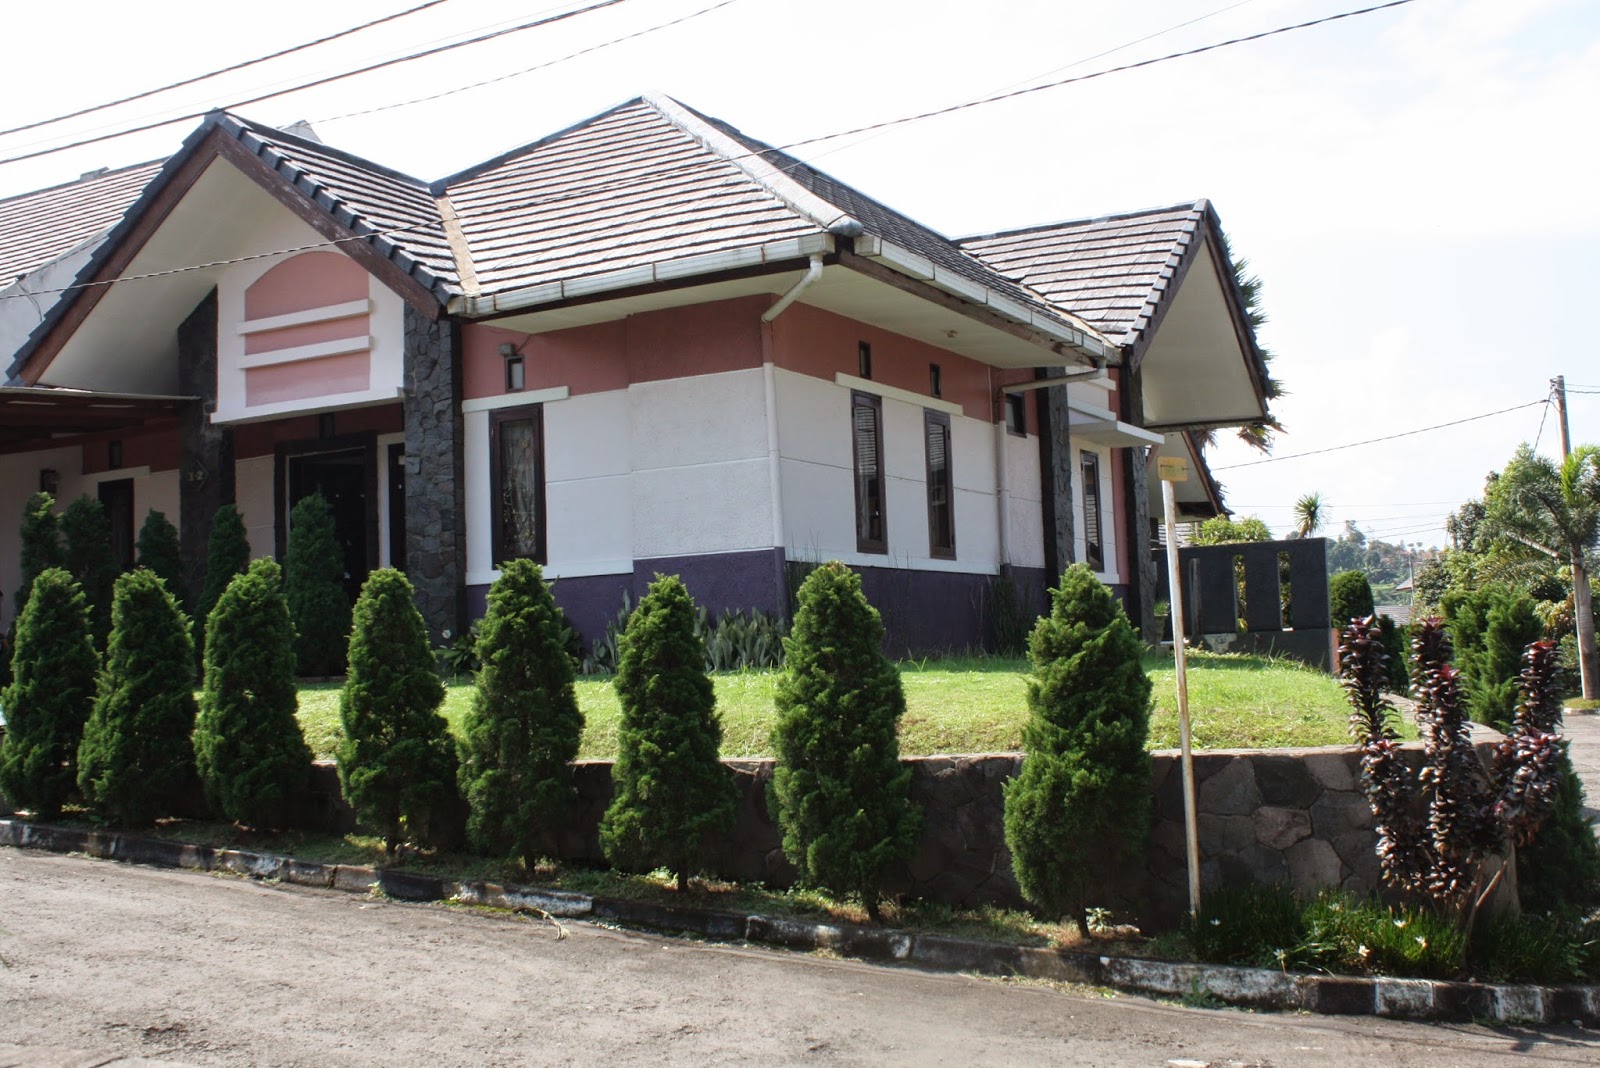 Rumah Lelang Dijual Di Bandung - Rumah XY